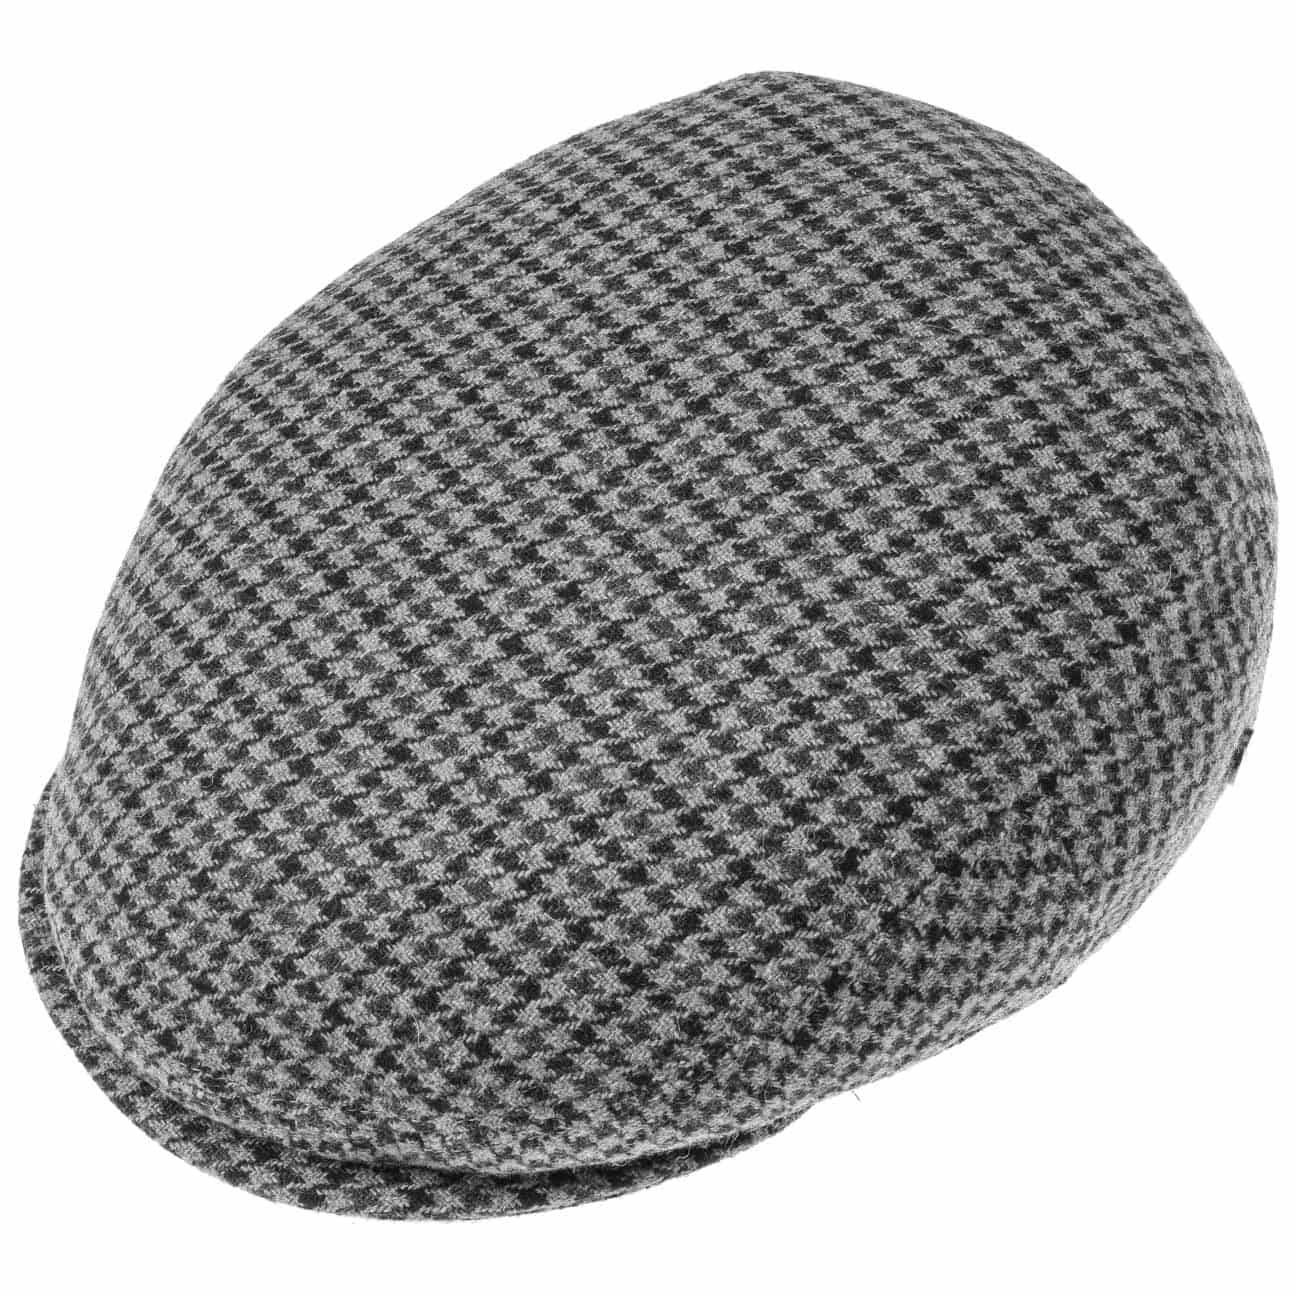 Lierys Flat Cap (1-St) mit Made in Italy Flatcap Schirm, grau